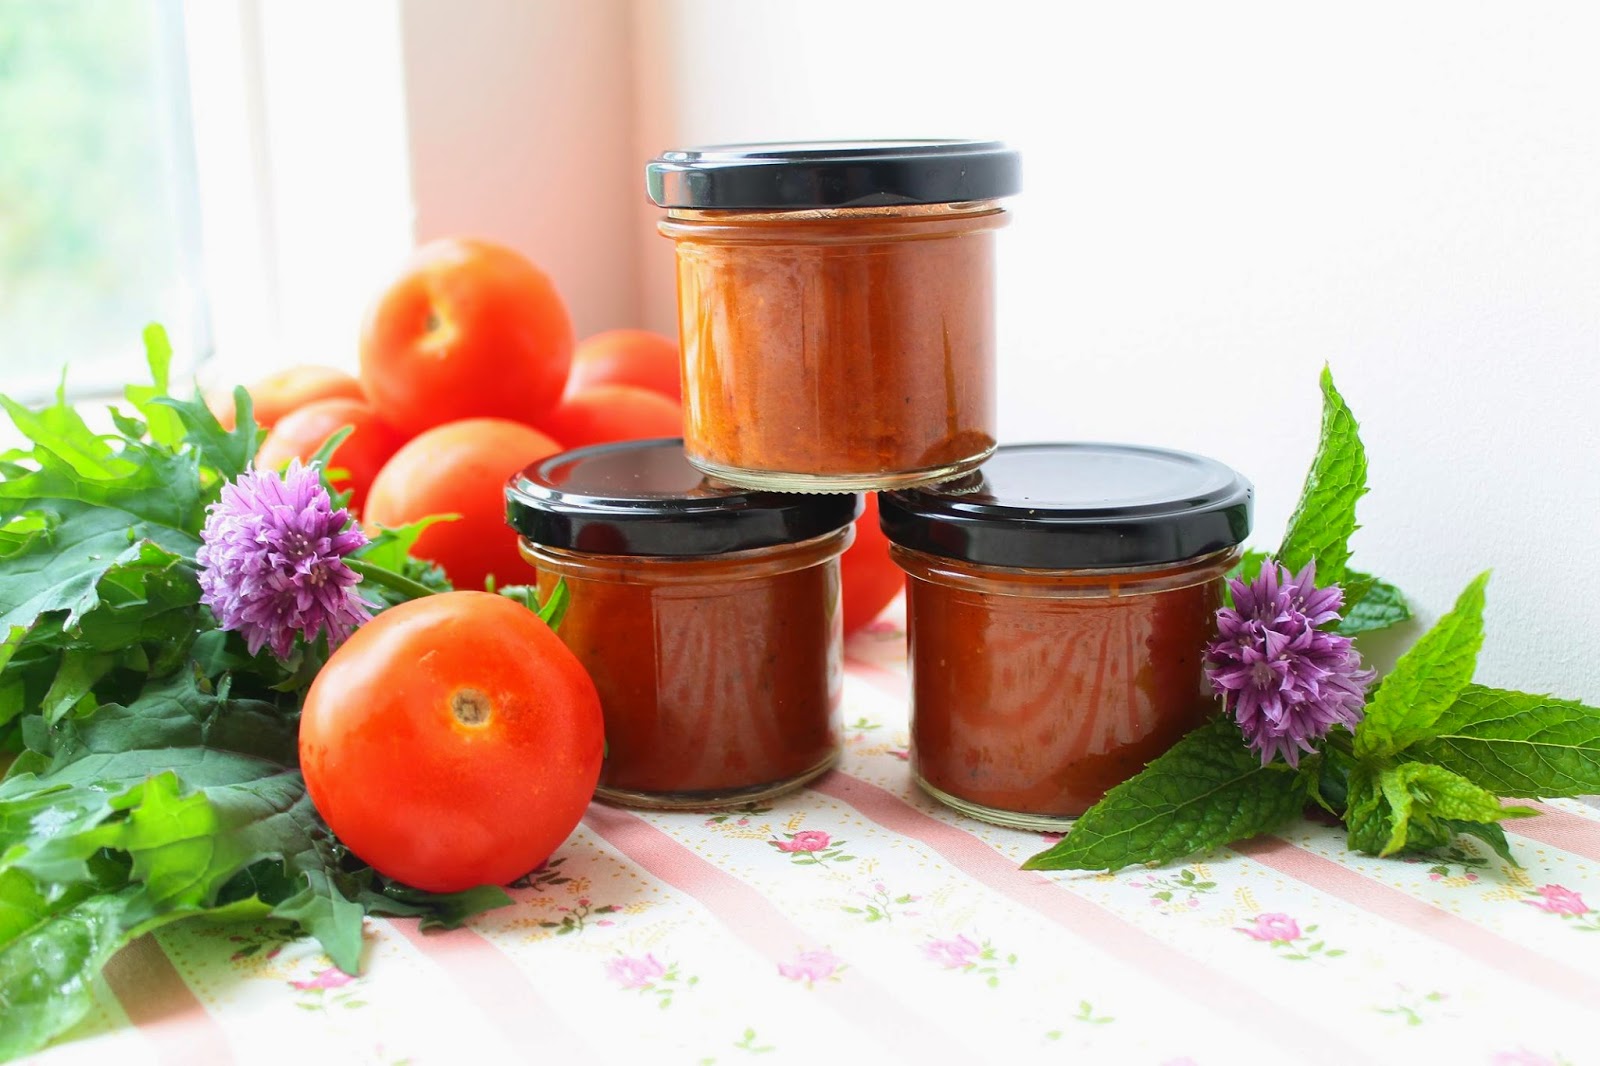 Molho de tomate assado para conservar - Roasted tomato sauce for canning